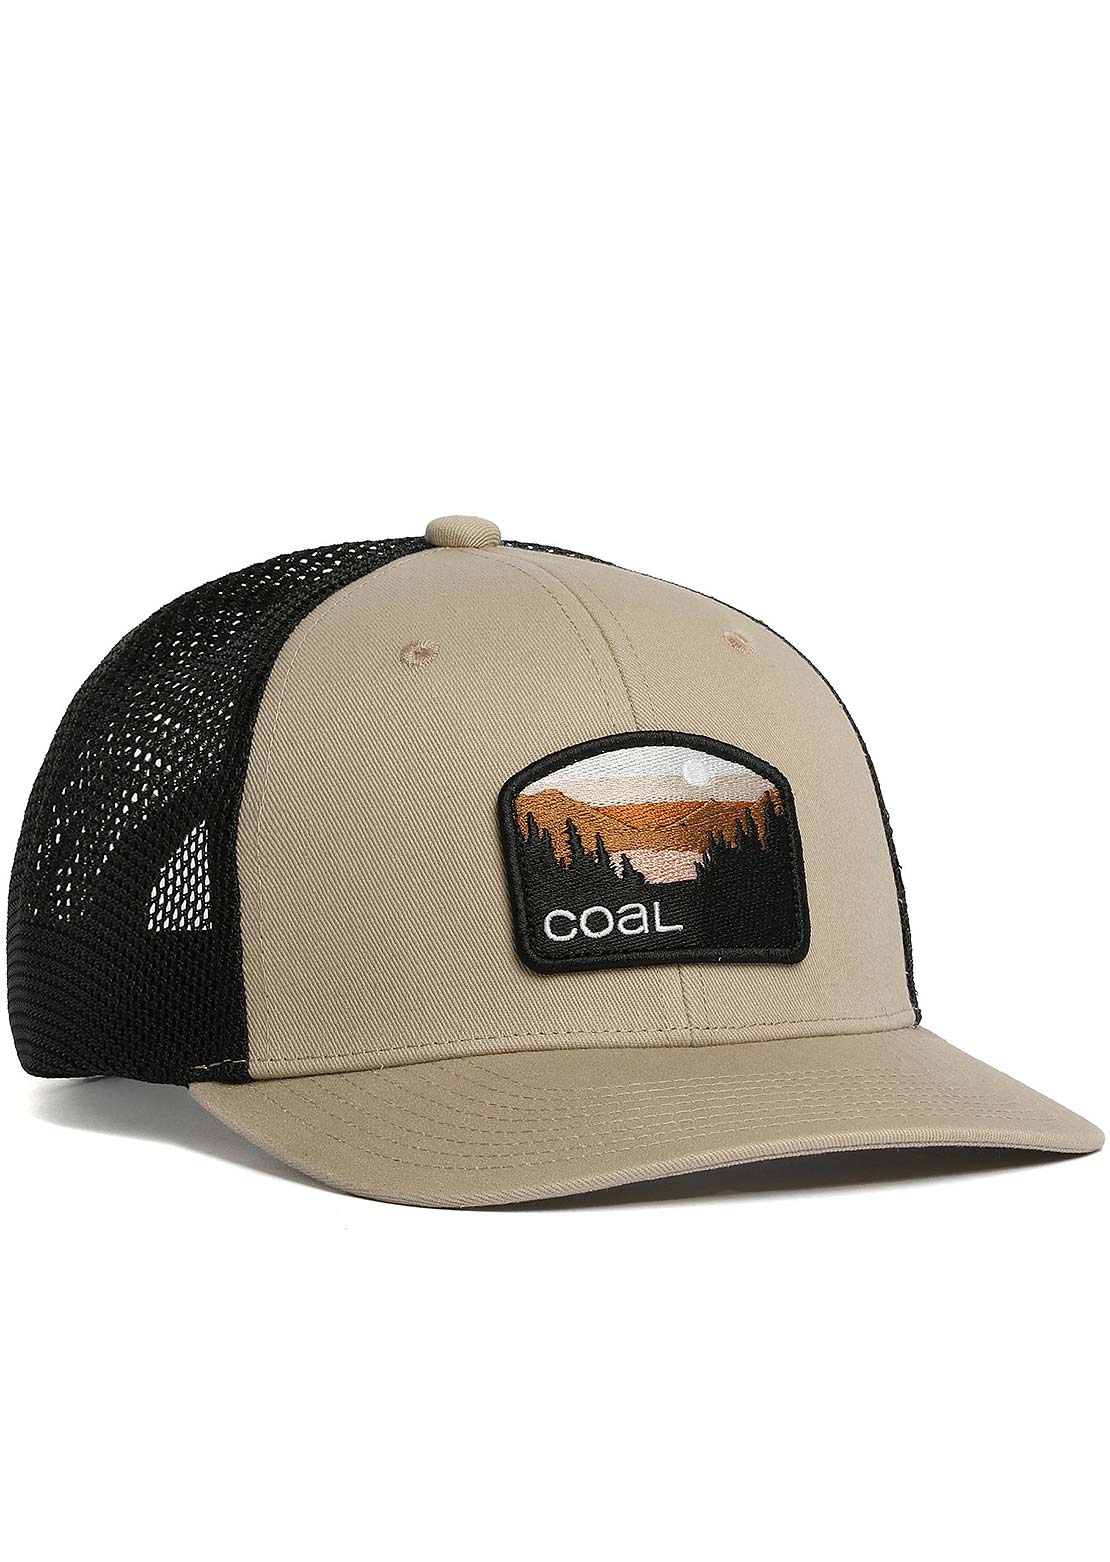 Coal The Hauler Low Cap Khaki